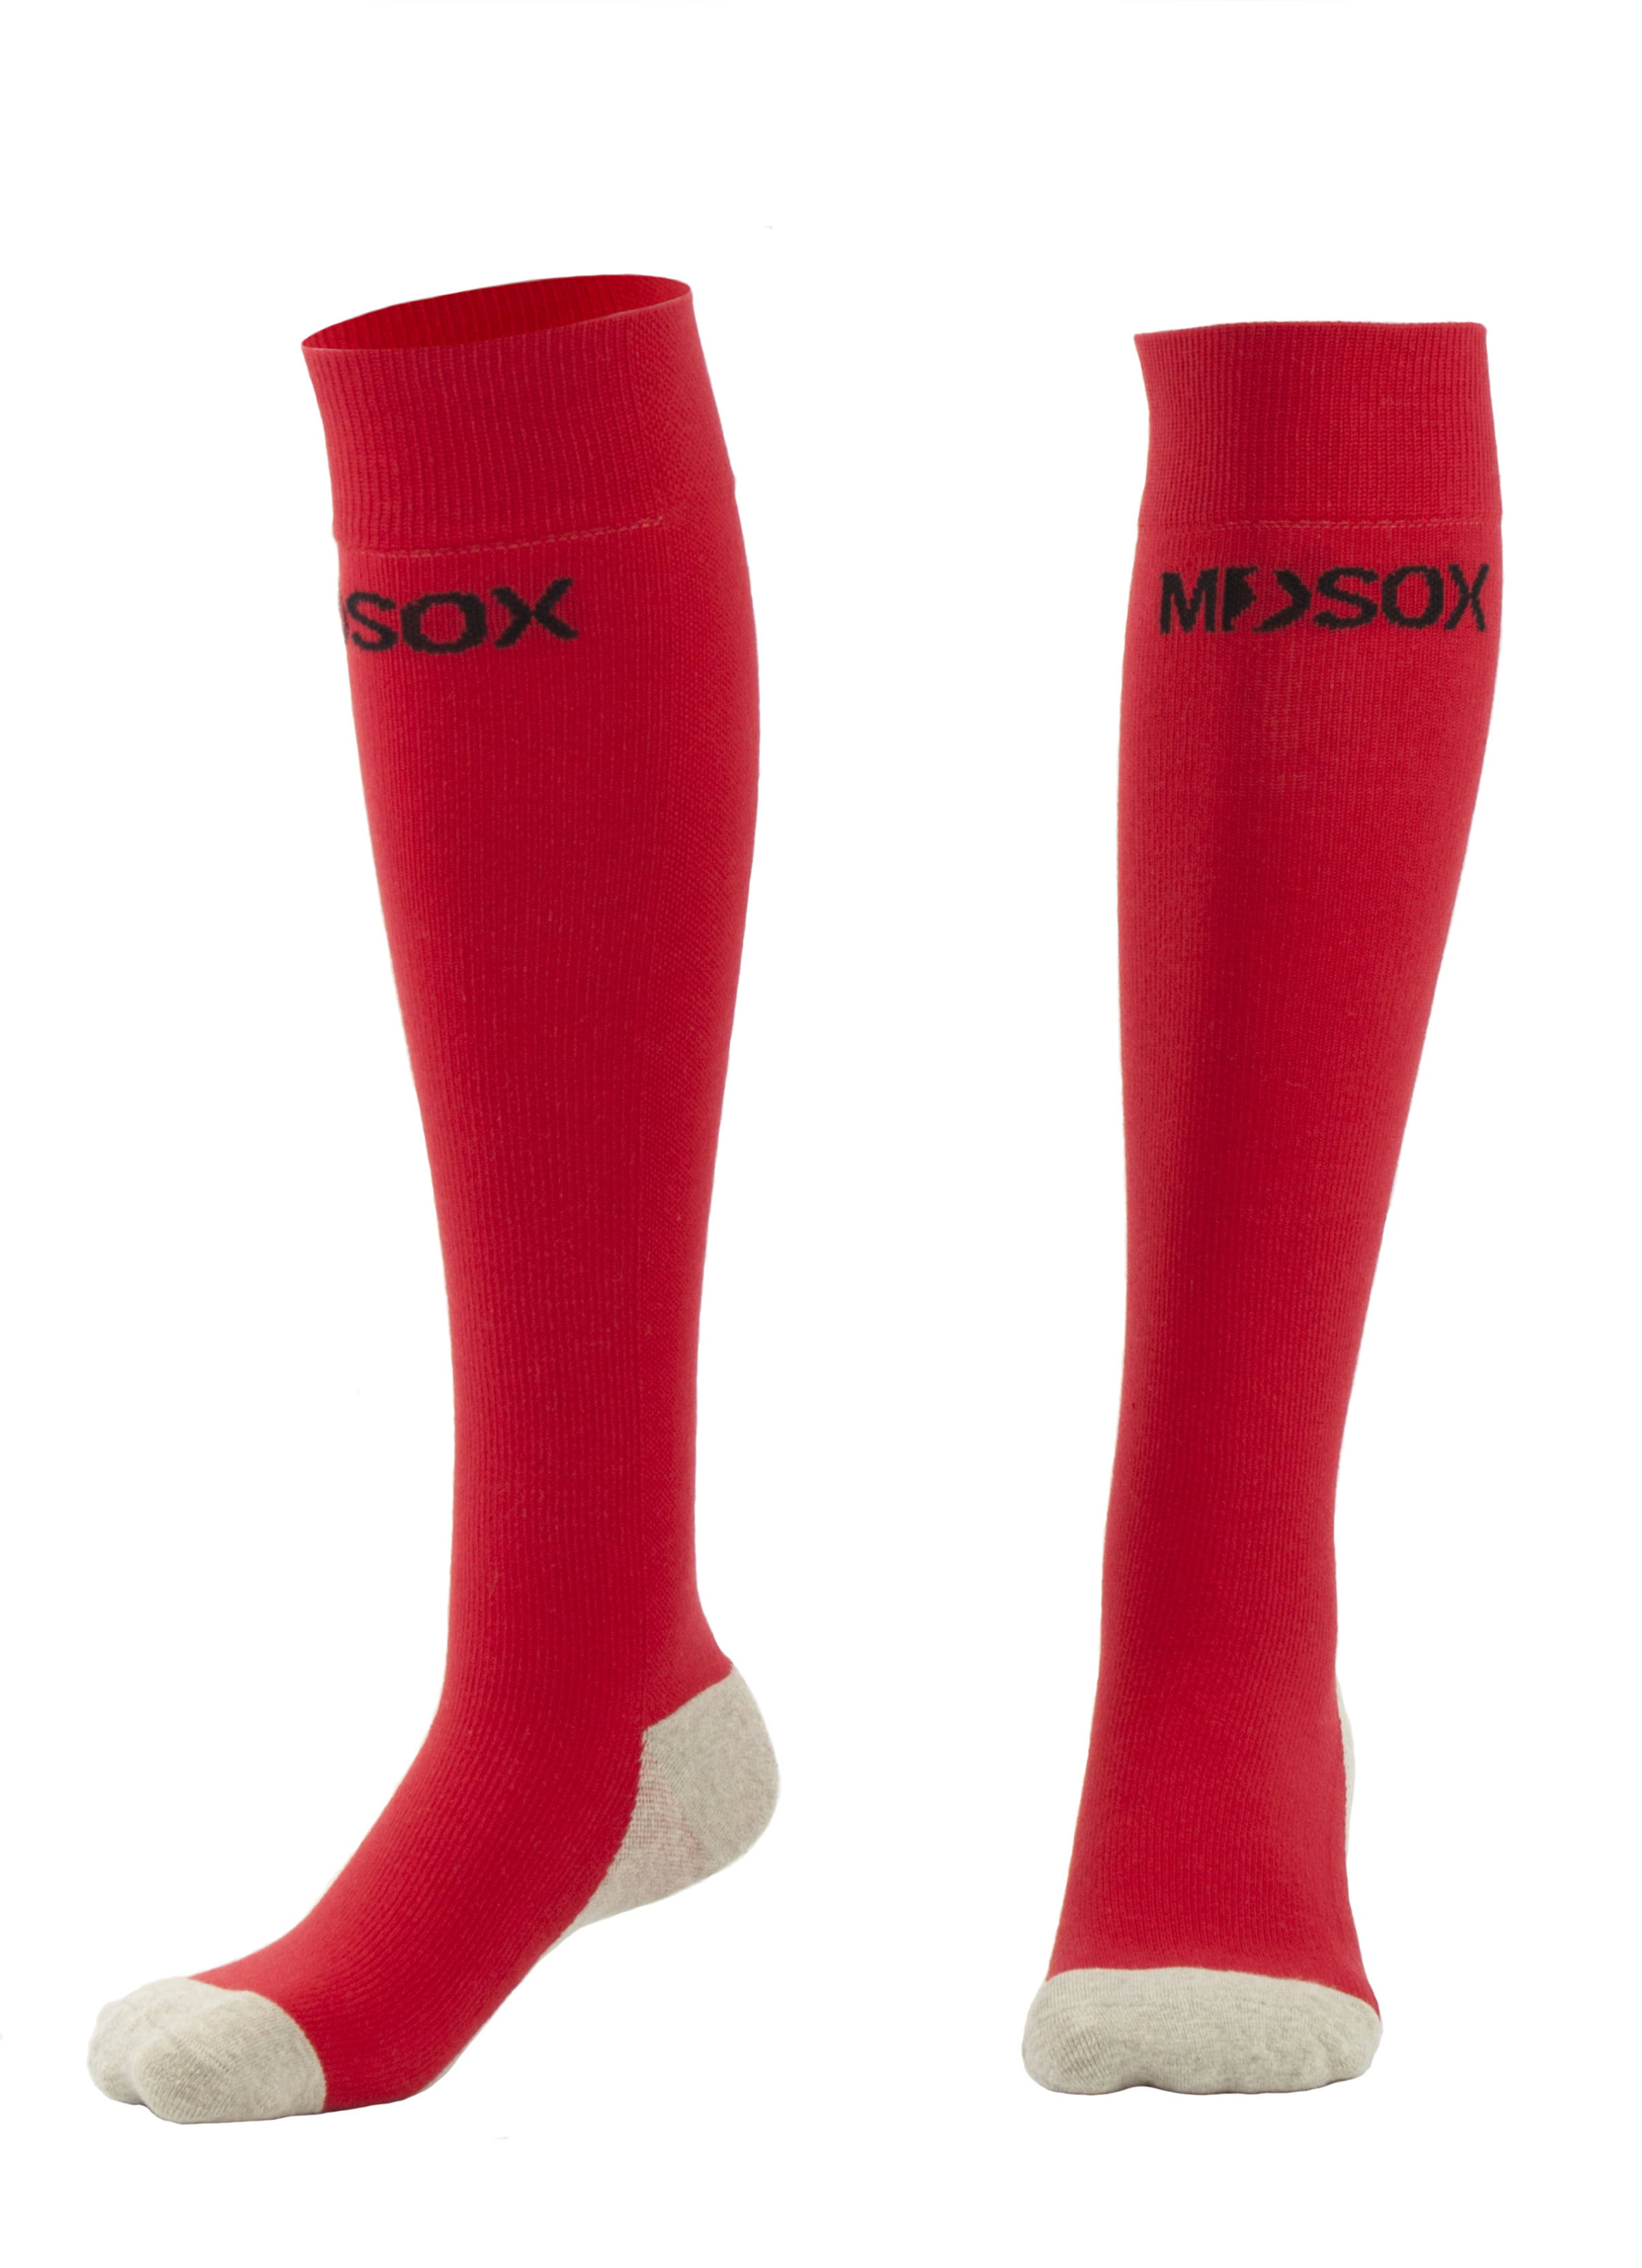 Hiking Travel & Flight Socks-20-25mmHg Compression Socks for Women and Men-Best Medical,for Running,Nursing,Circulation & Recovery 